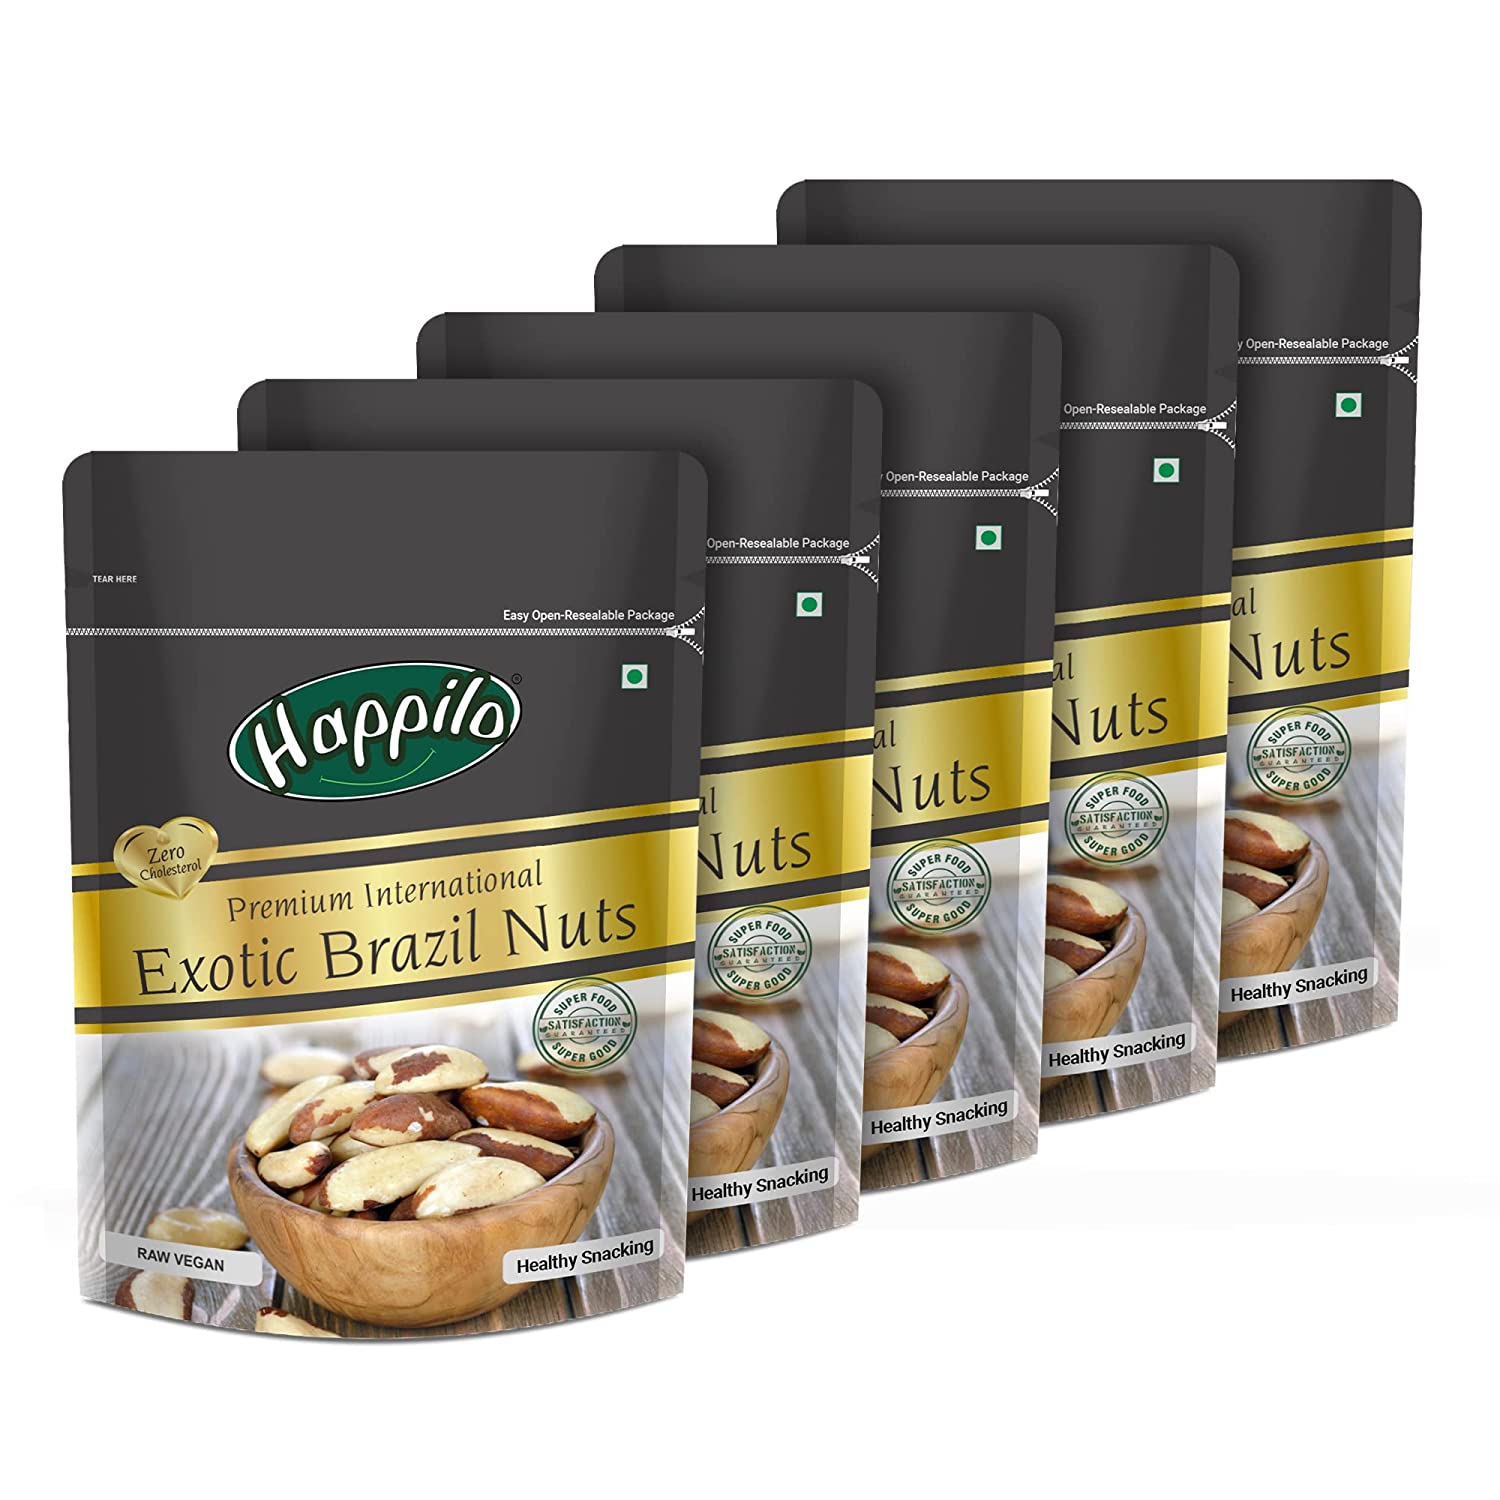 Happilo Premium International Exotic Brazil Nuts | Happilo